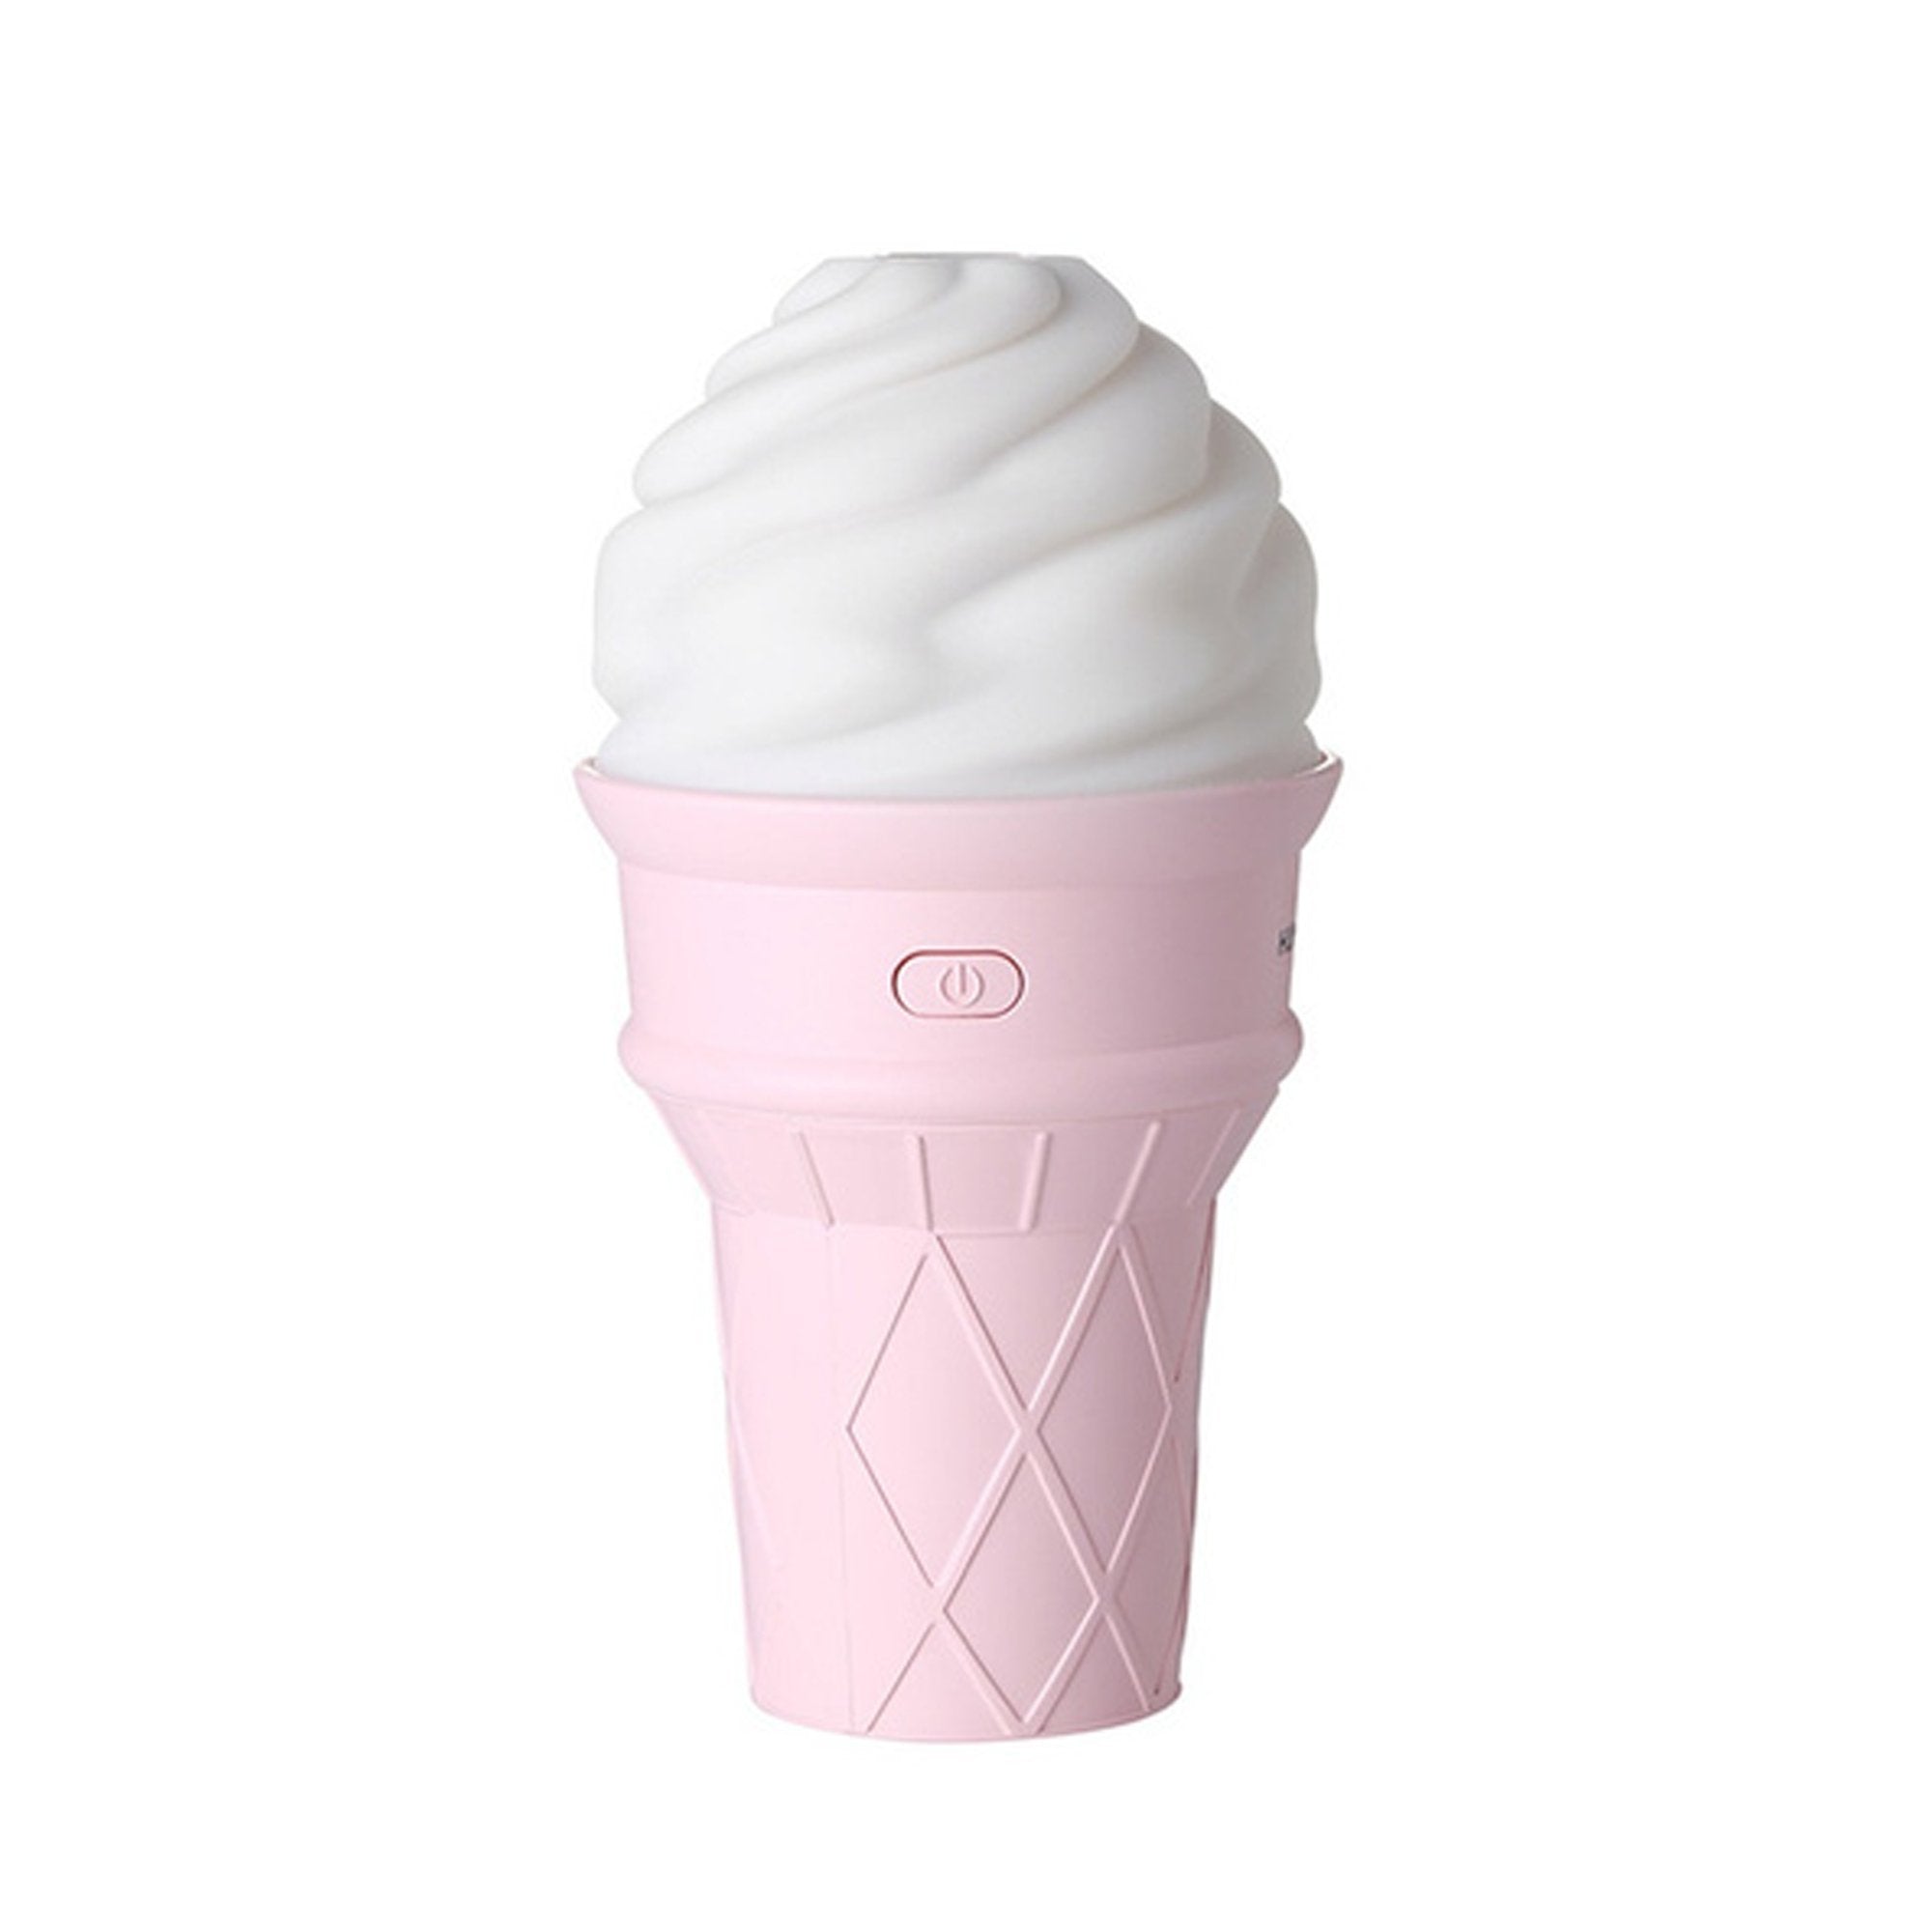 0396 ice cream design led humidifier for freshening air fragrance multicoloured